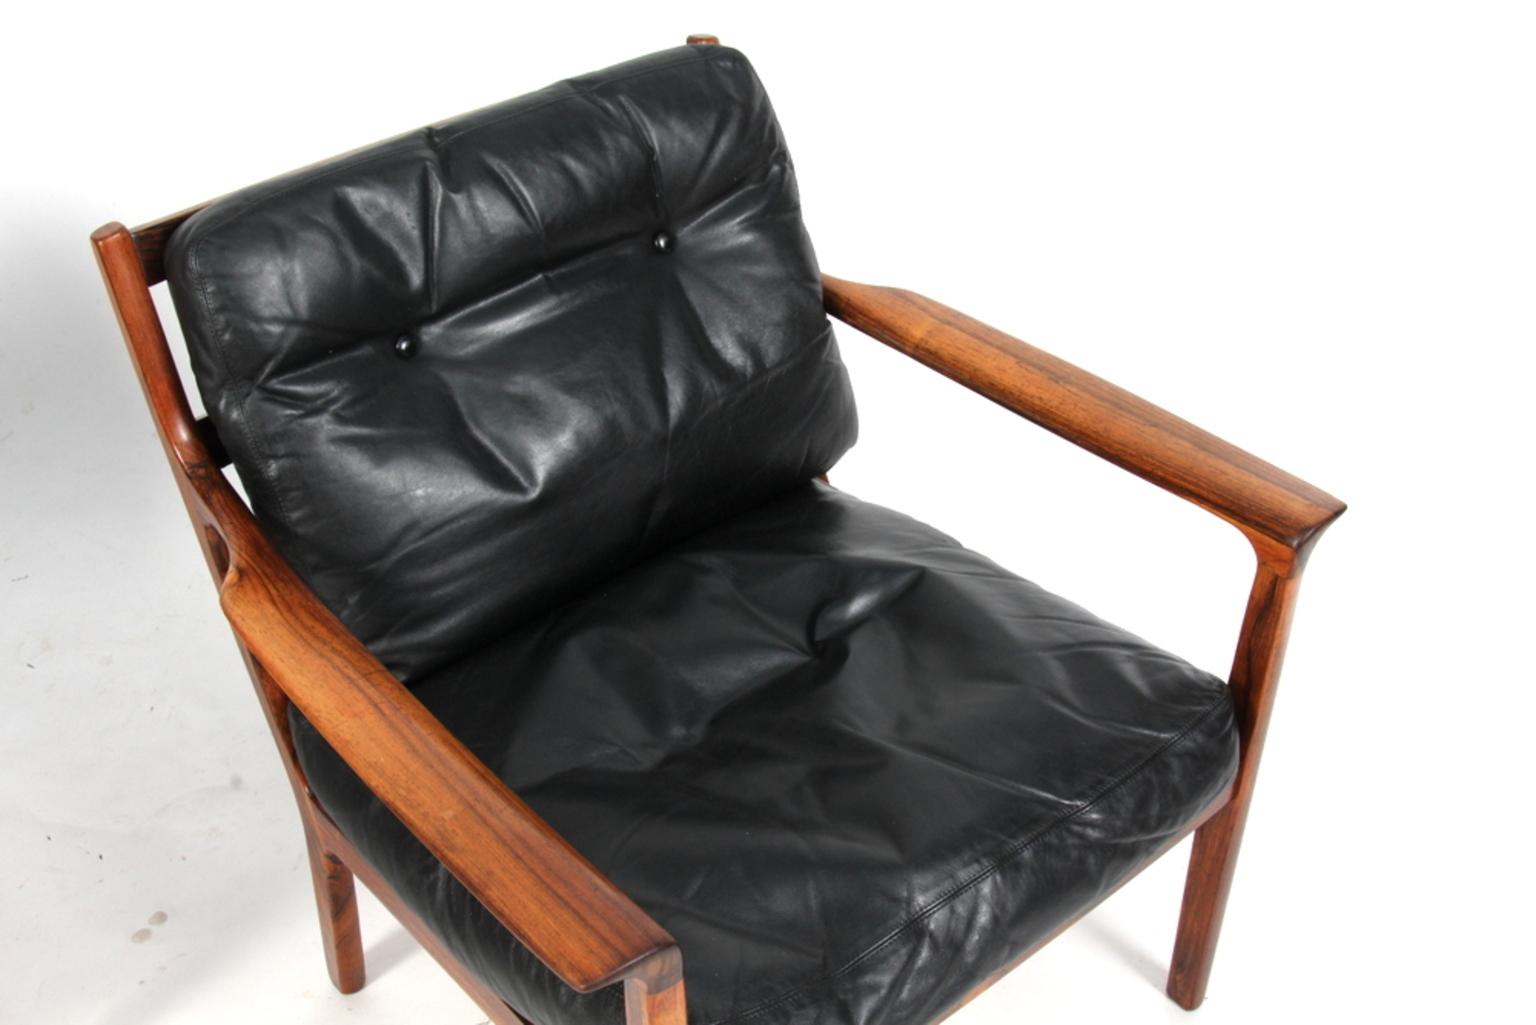 Scandinavian Modern Fredrik Kayser Lounge Chair in Rosewood and Black Original Leather, 1960s